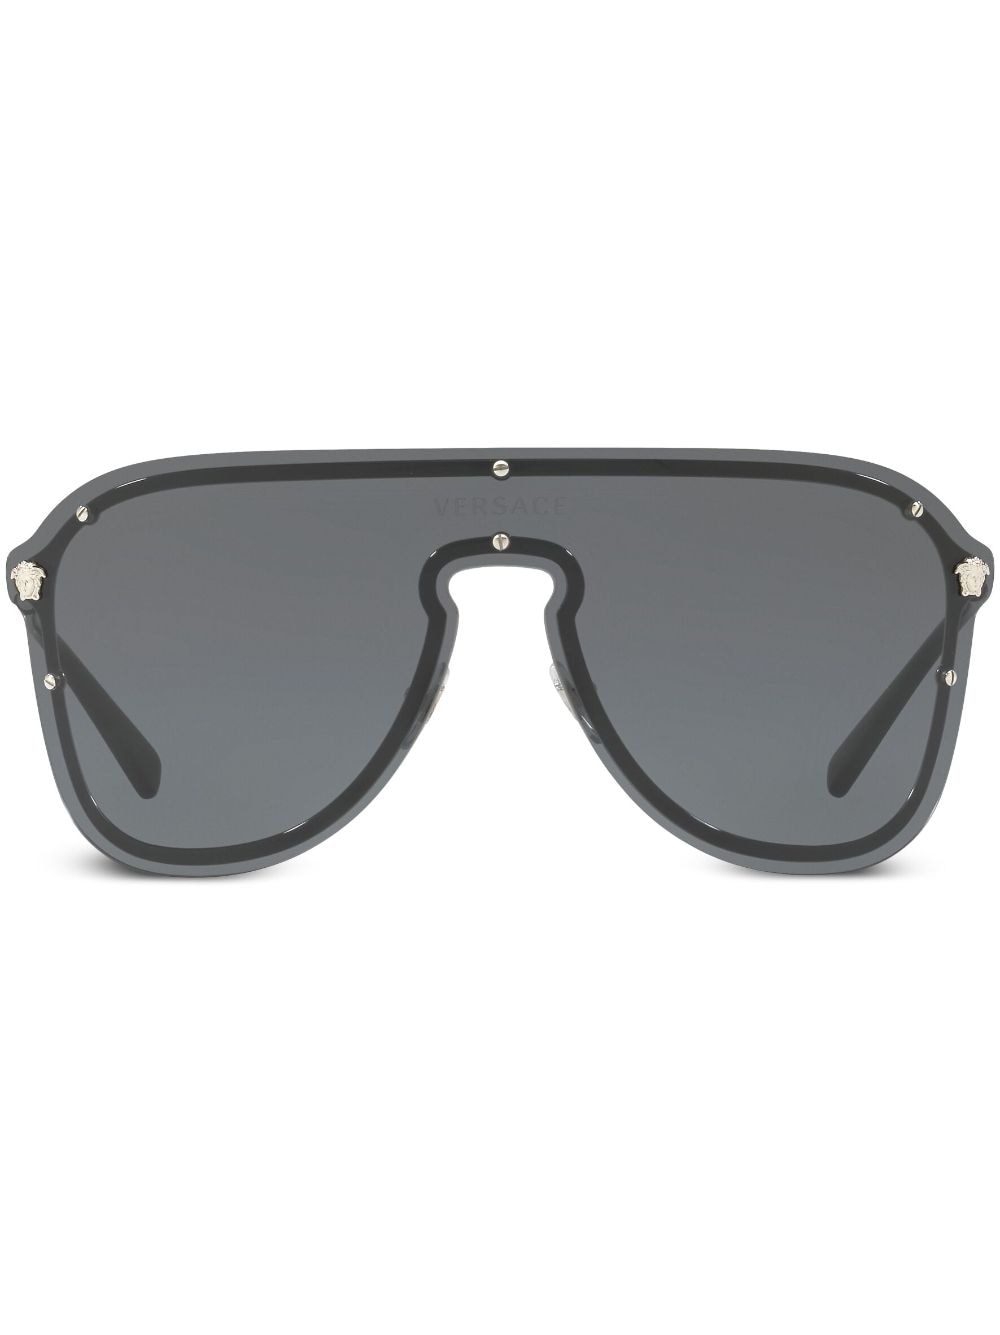 Versace Eyewear #Frenergy visor sunglasses - Silver von Versace Eyewear